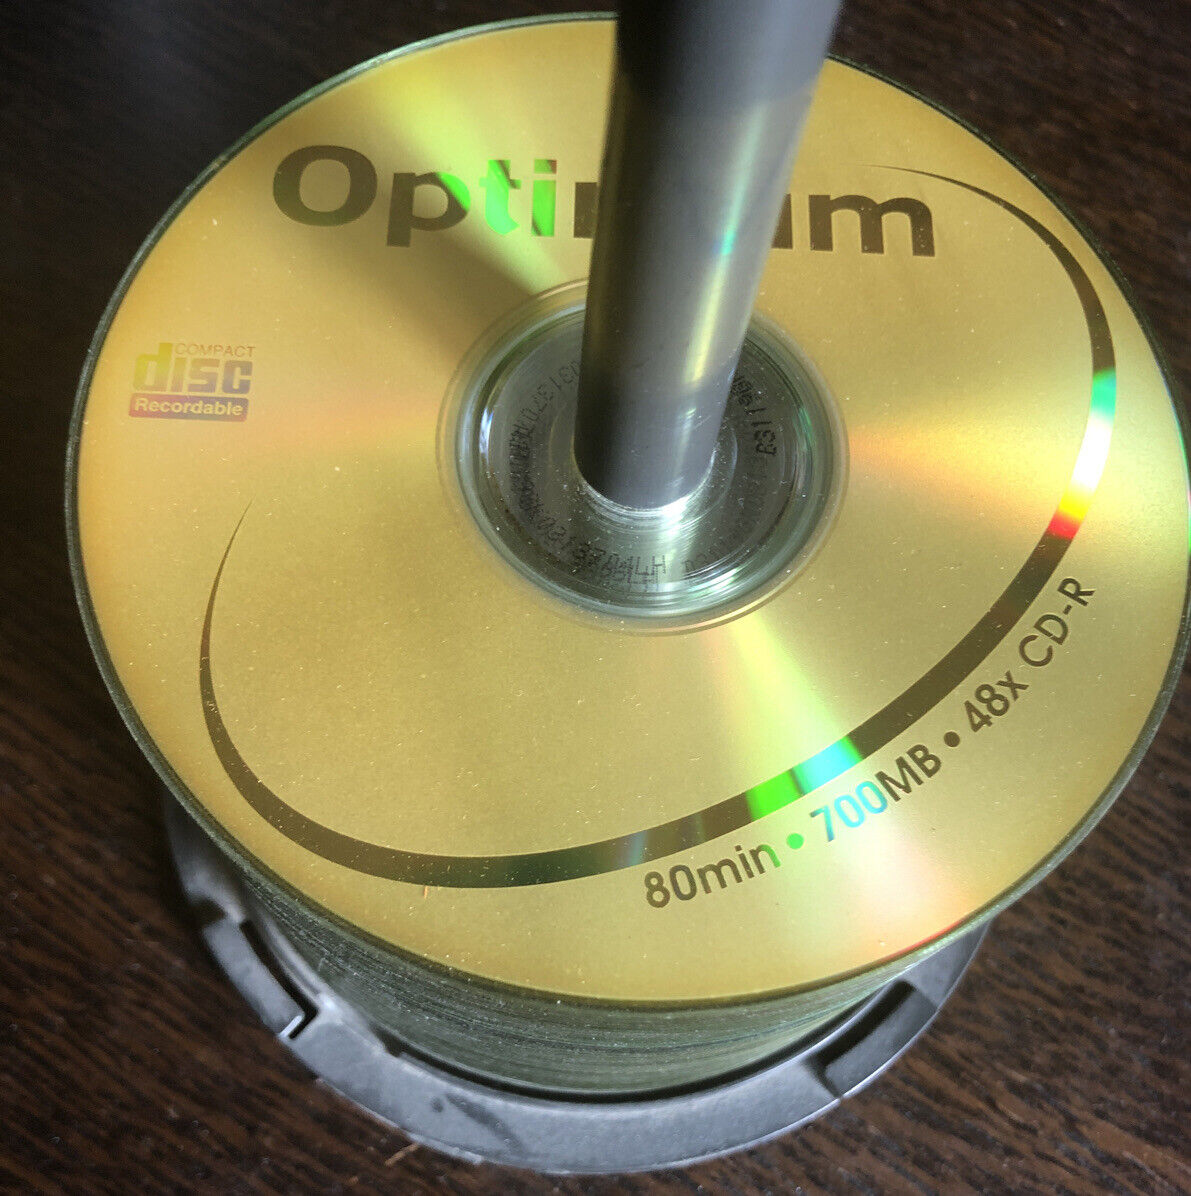 Optimum 48x*80min*700mb CD-R Discs 70 Lot Of  (Open Case)